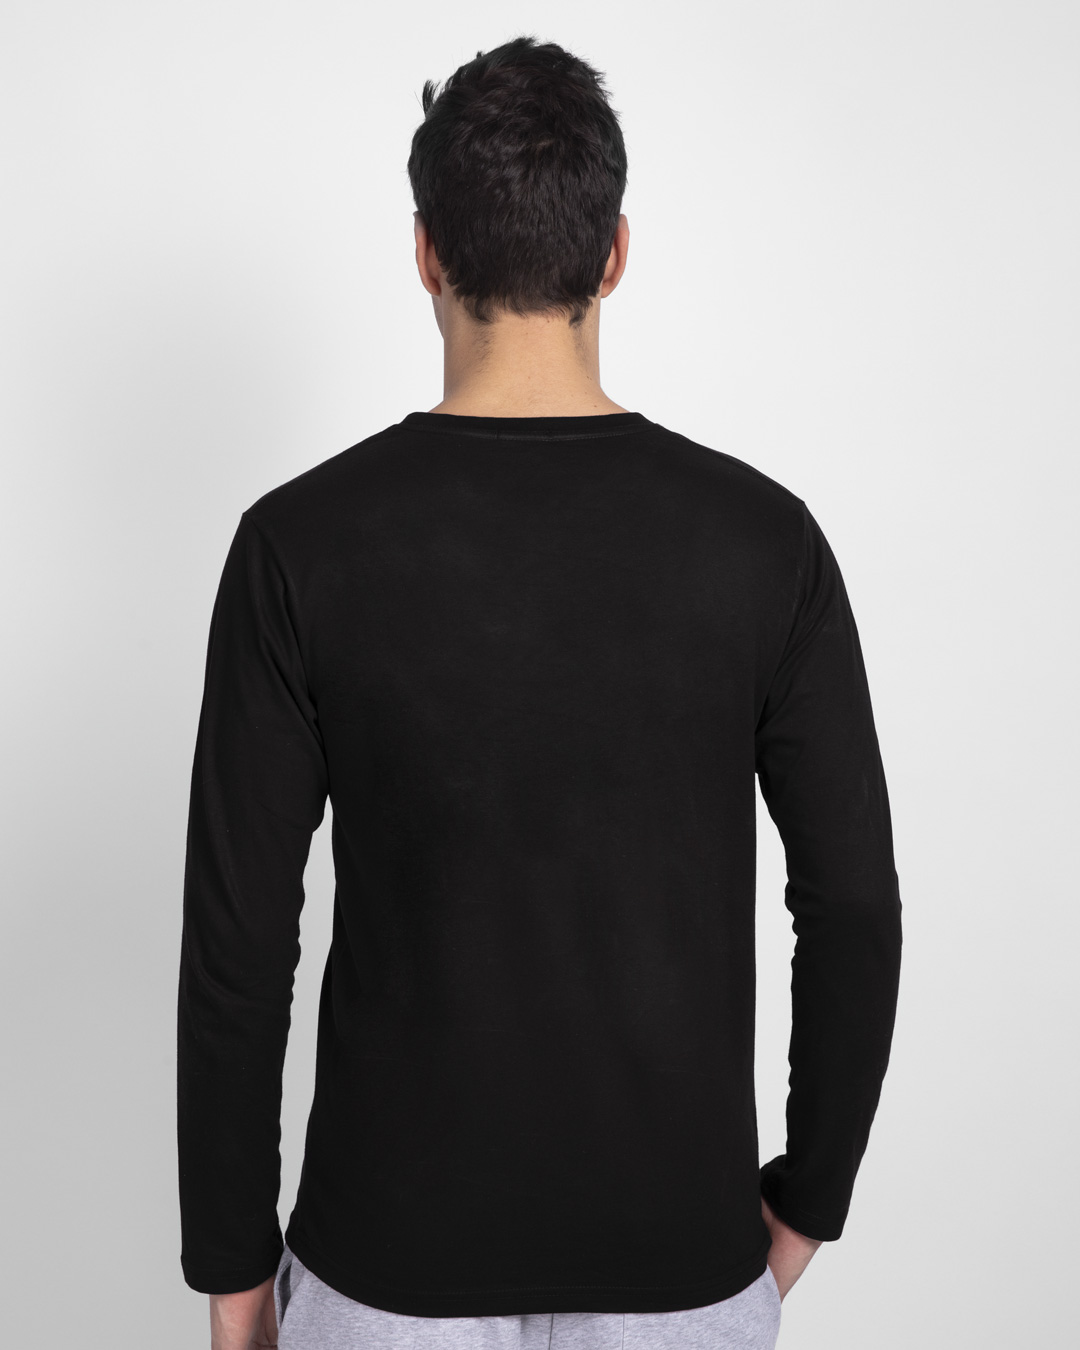 Shop Cricket Machine Full Sleeve T-Shirt Black-Back